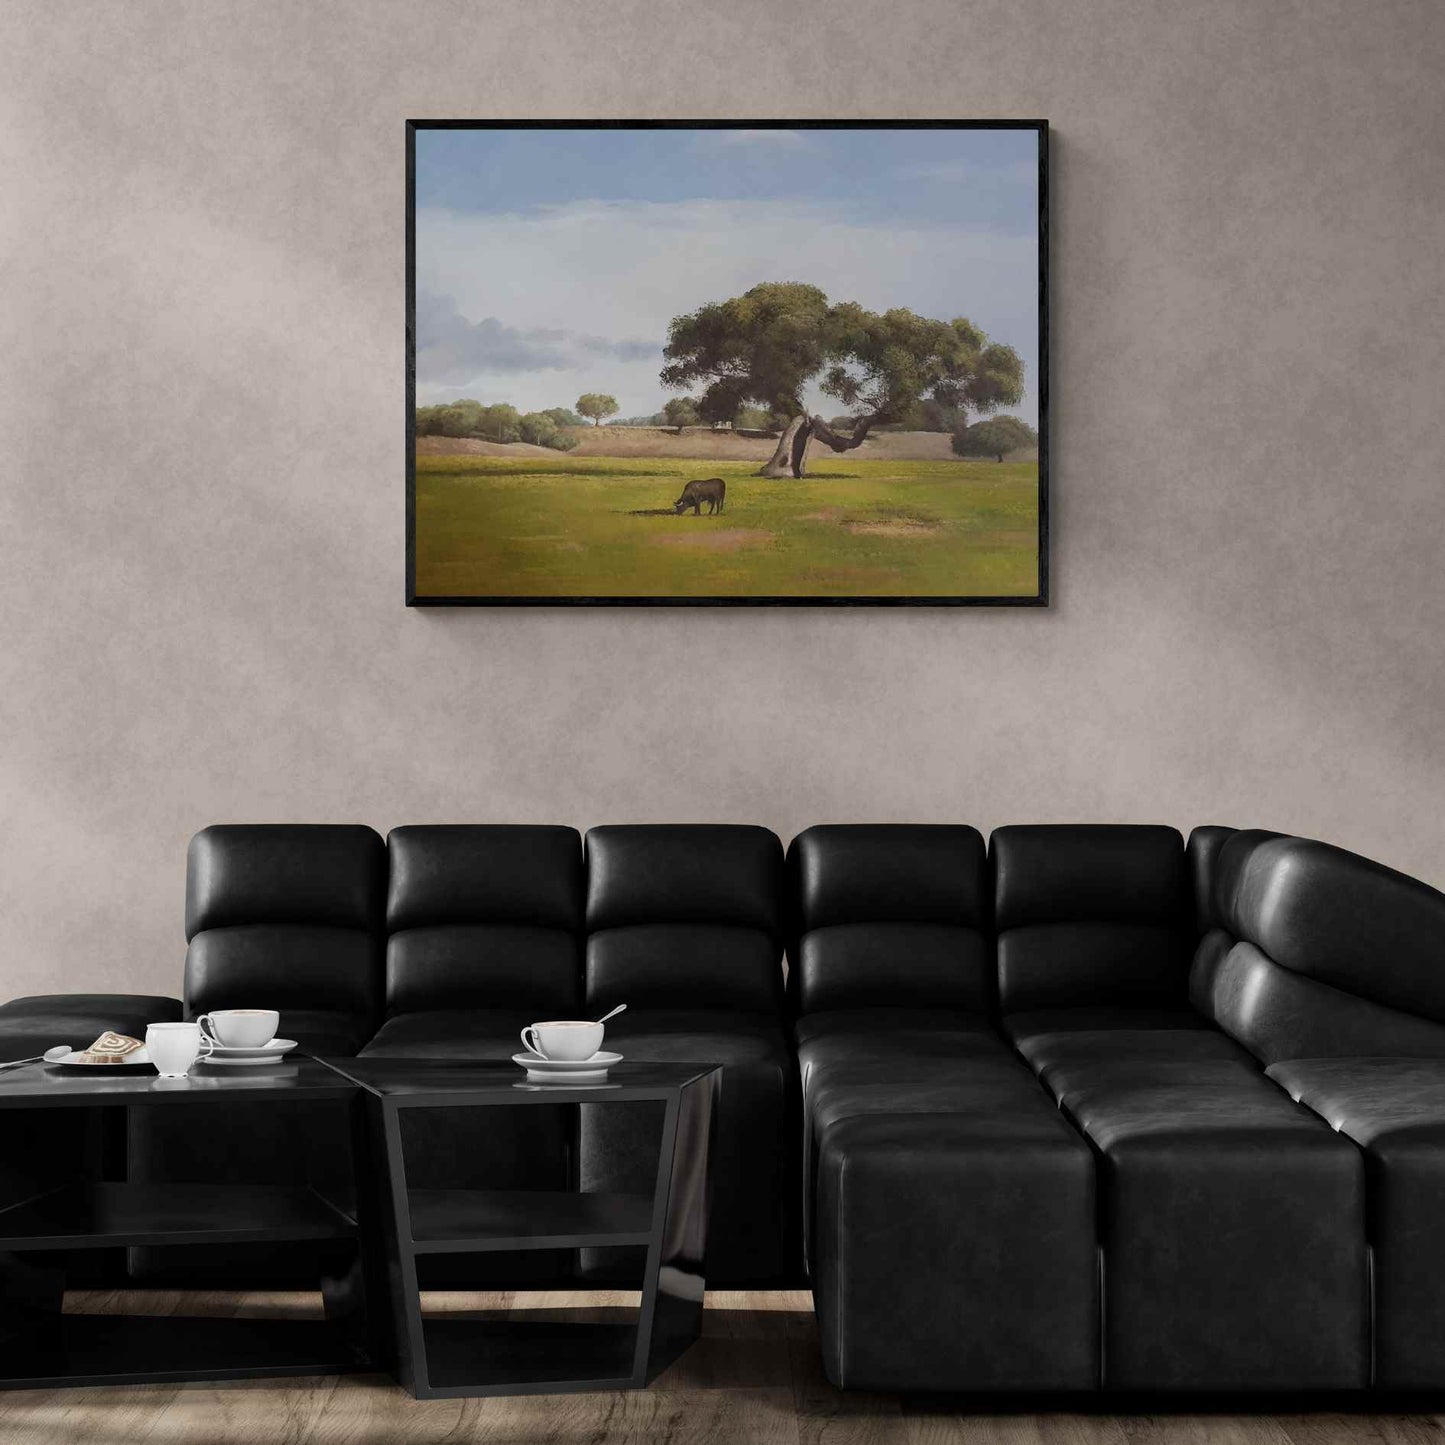 Toro Bravo Encina Picture 115x85 cm